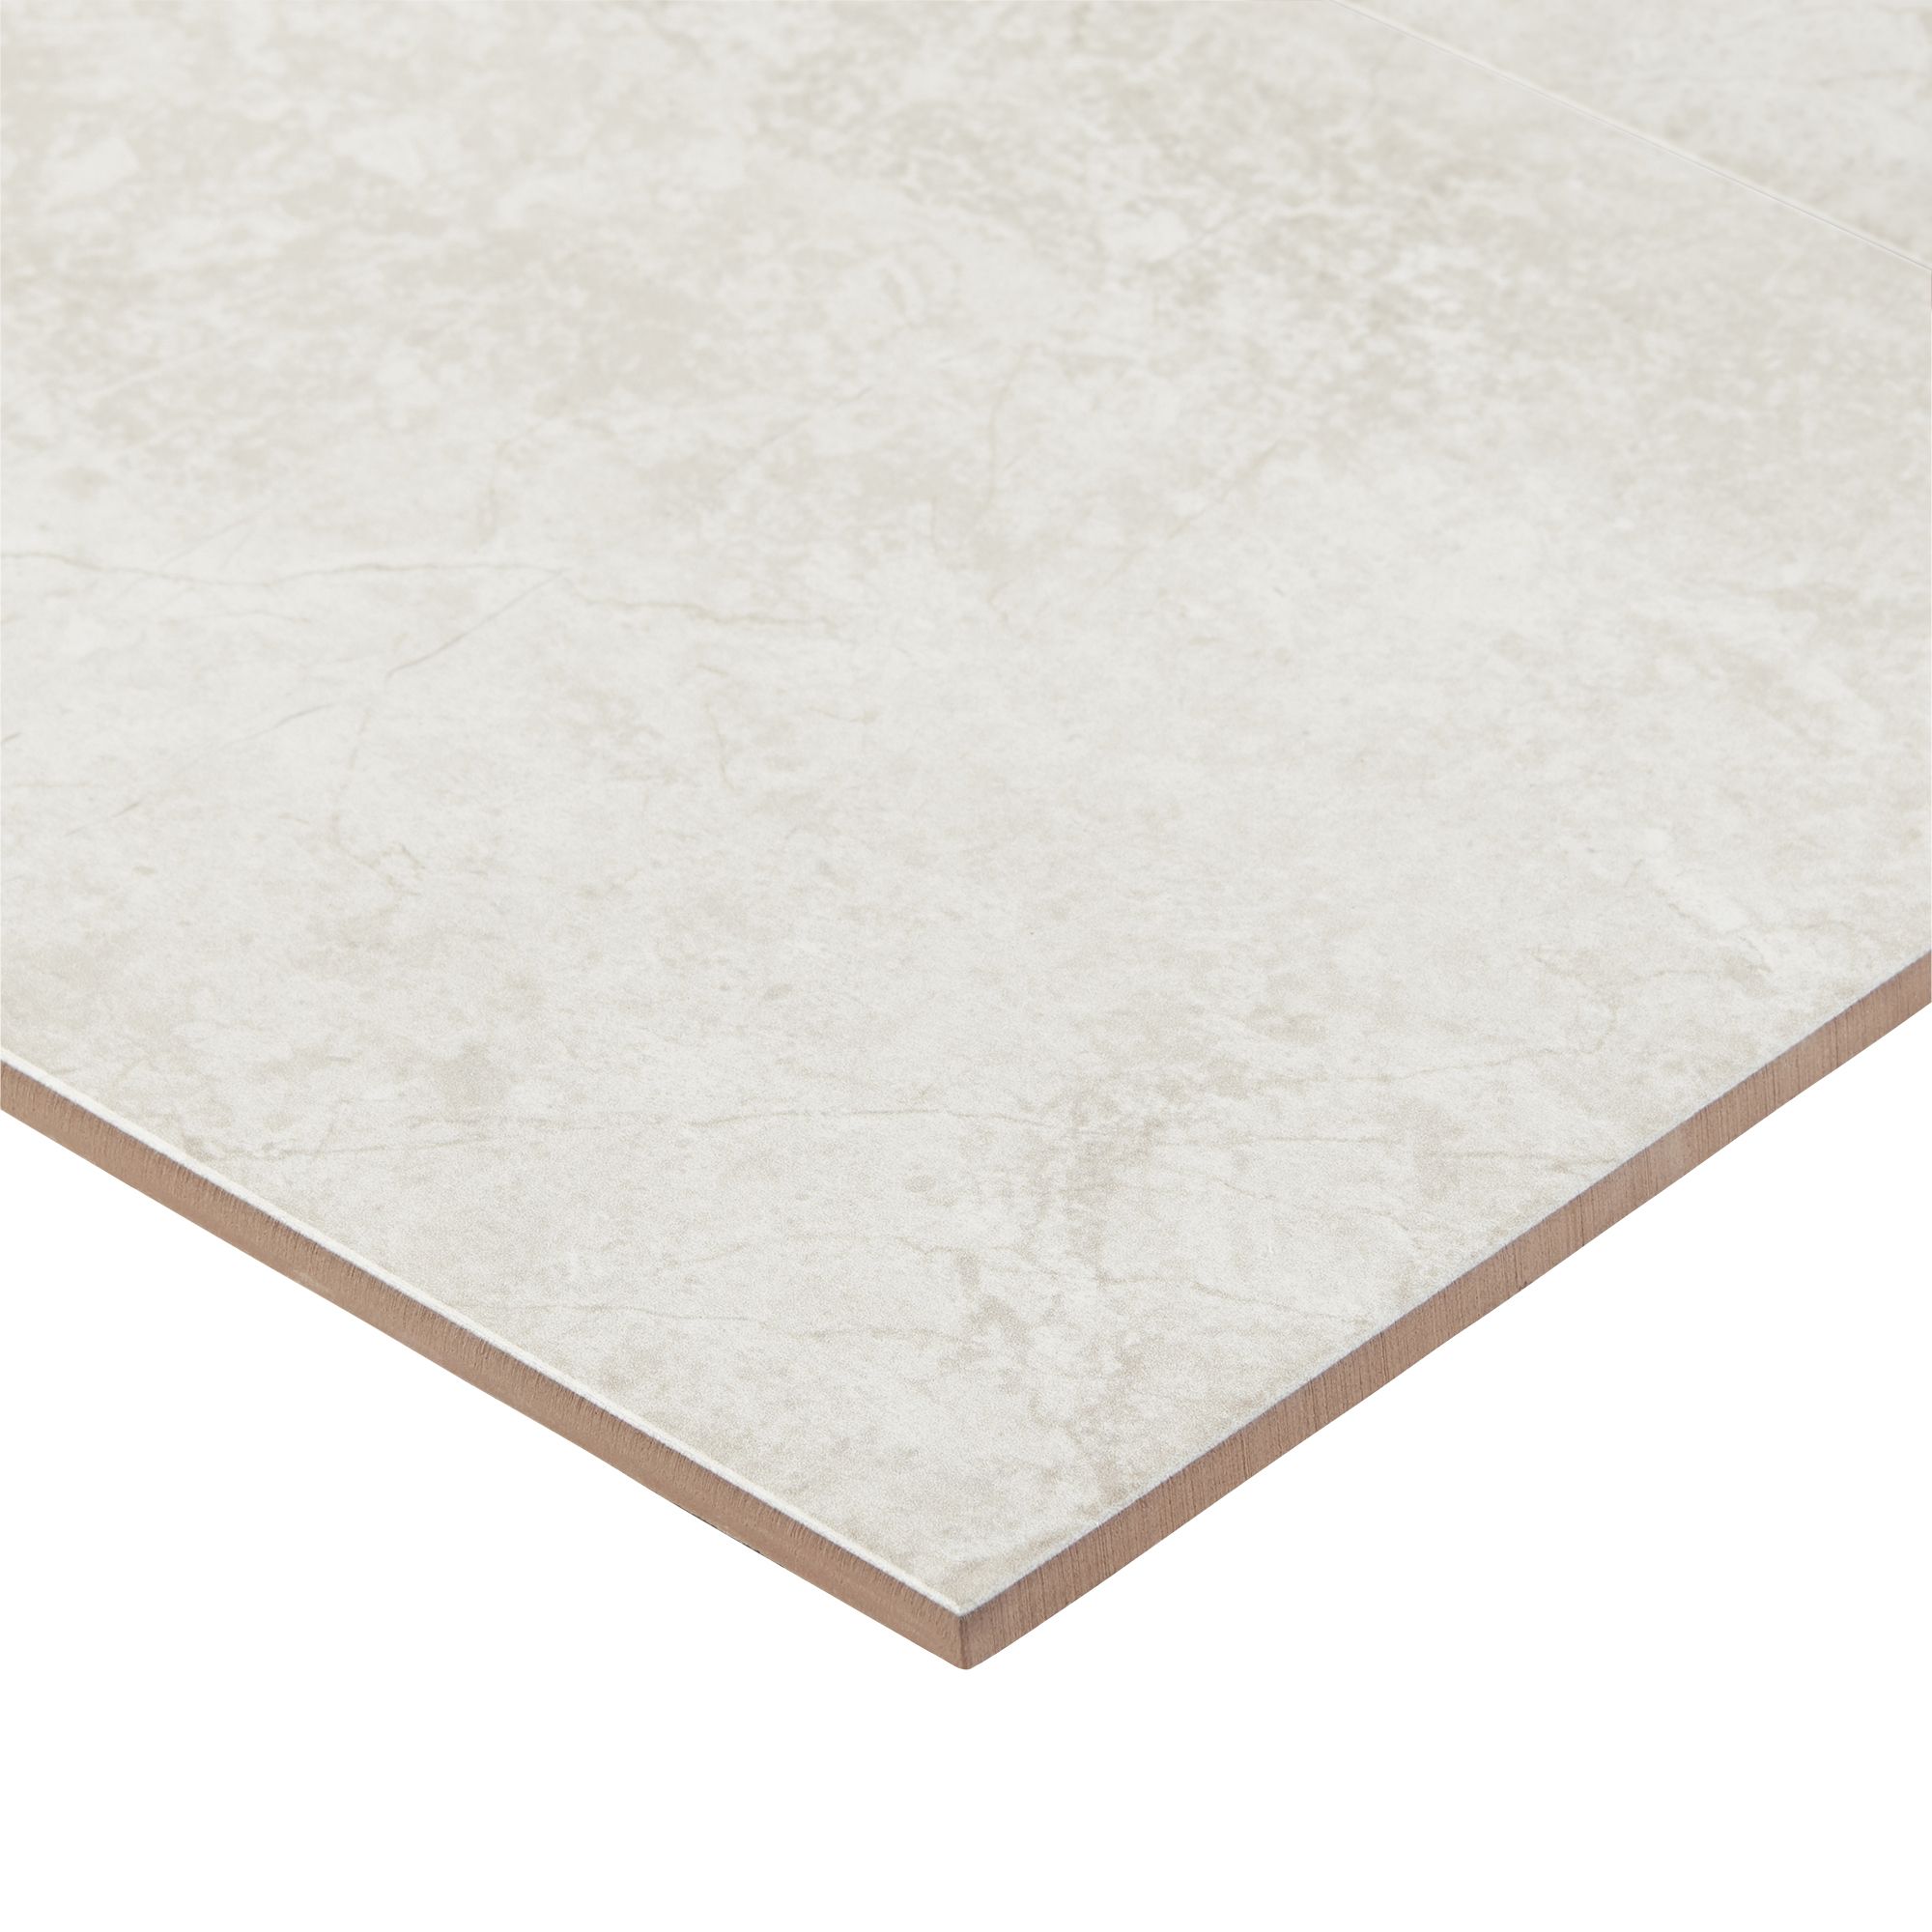 Commo White Gloss Stone effect Ceramic Wall Tile Sample